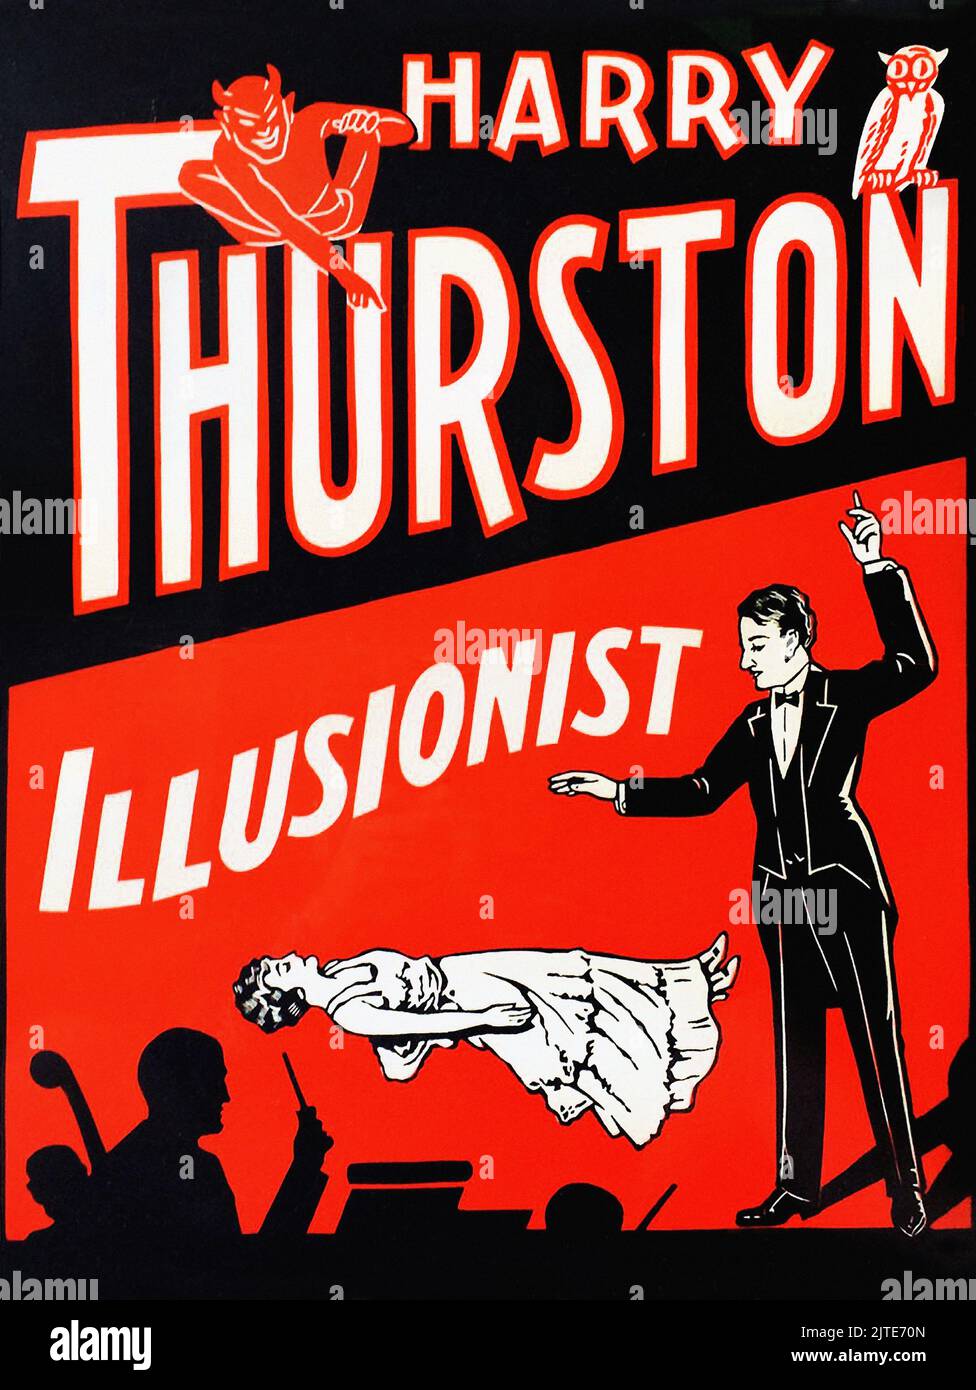 Vintage 1920s Magician Poster - Harry Thurston Illusionist Stock Photo